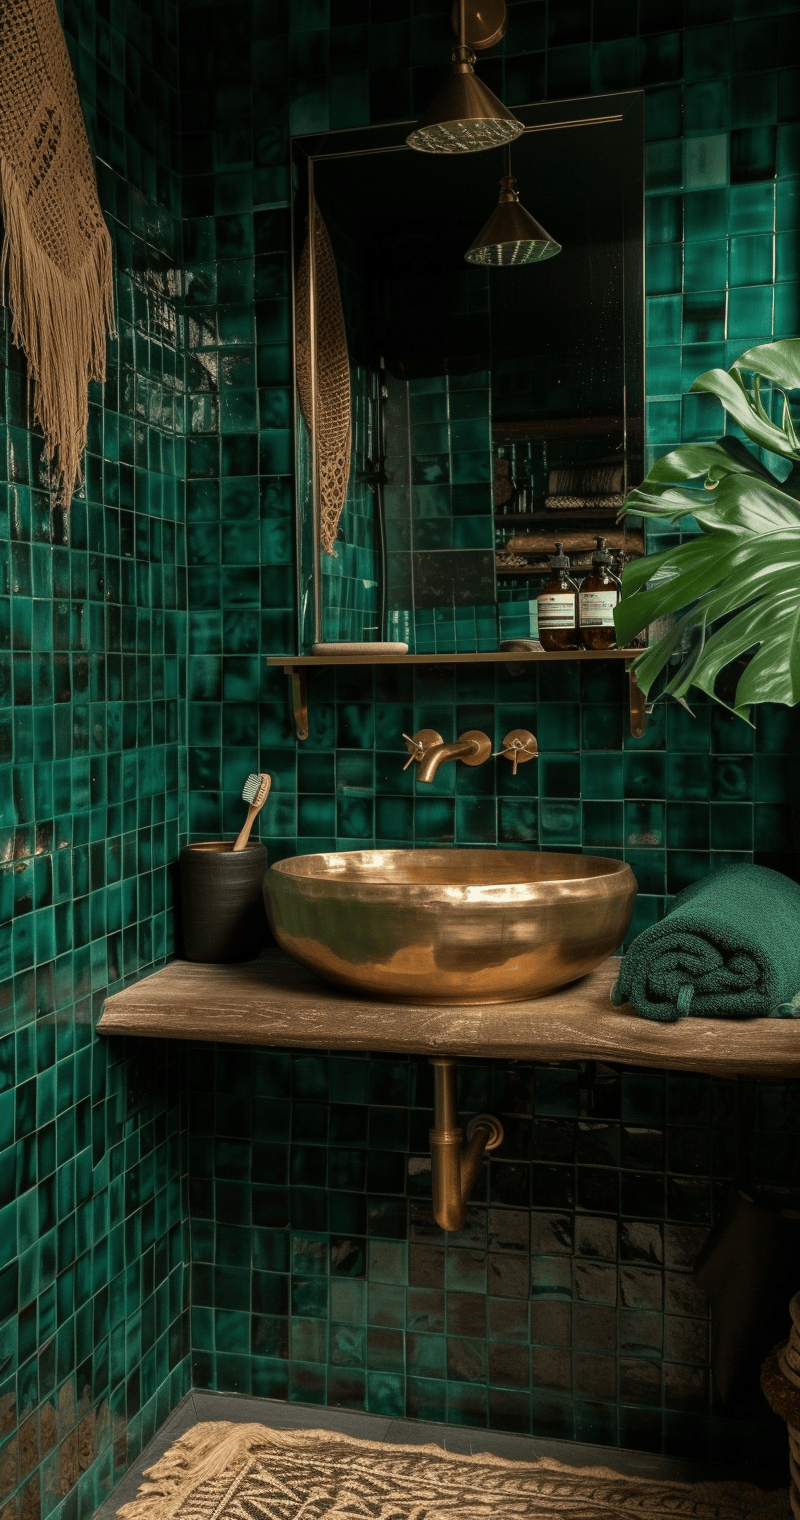 Modern spin on 70s bathroom decor capturing the spirit of the era